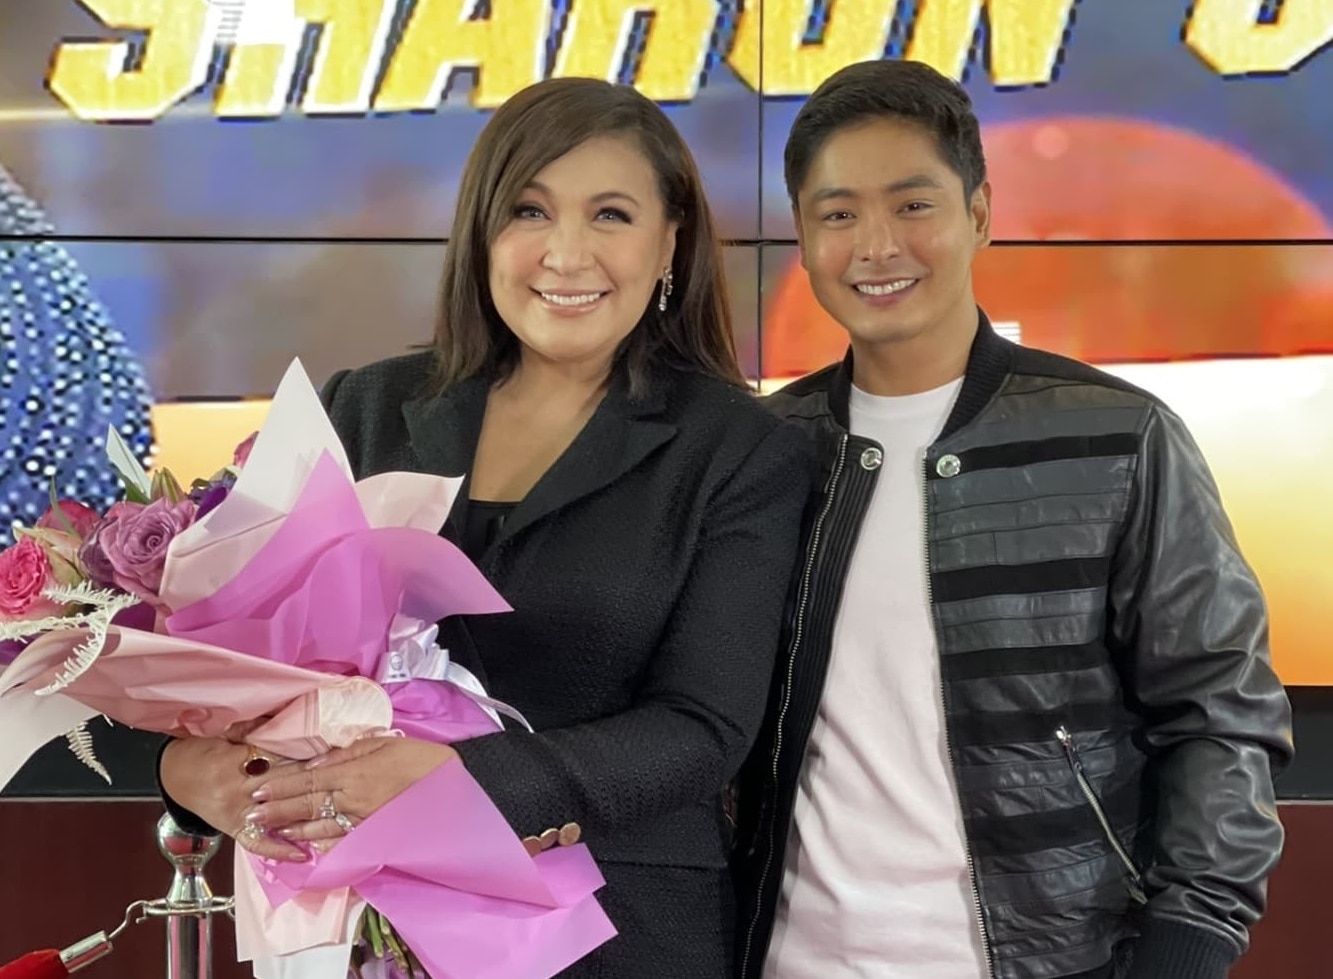 Megastar Sharon Cuneta to star in first Kapamilya teleserye, joins "FPJ's Ang Probinsyano"